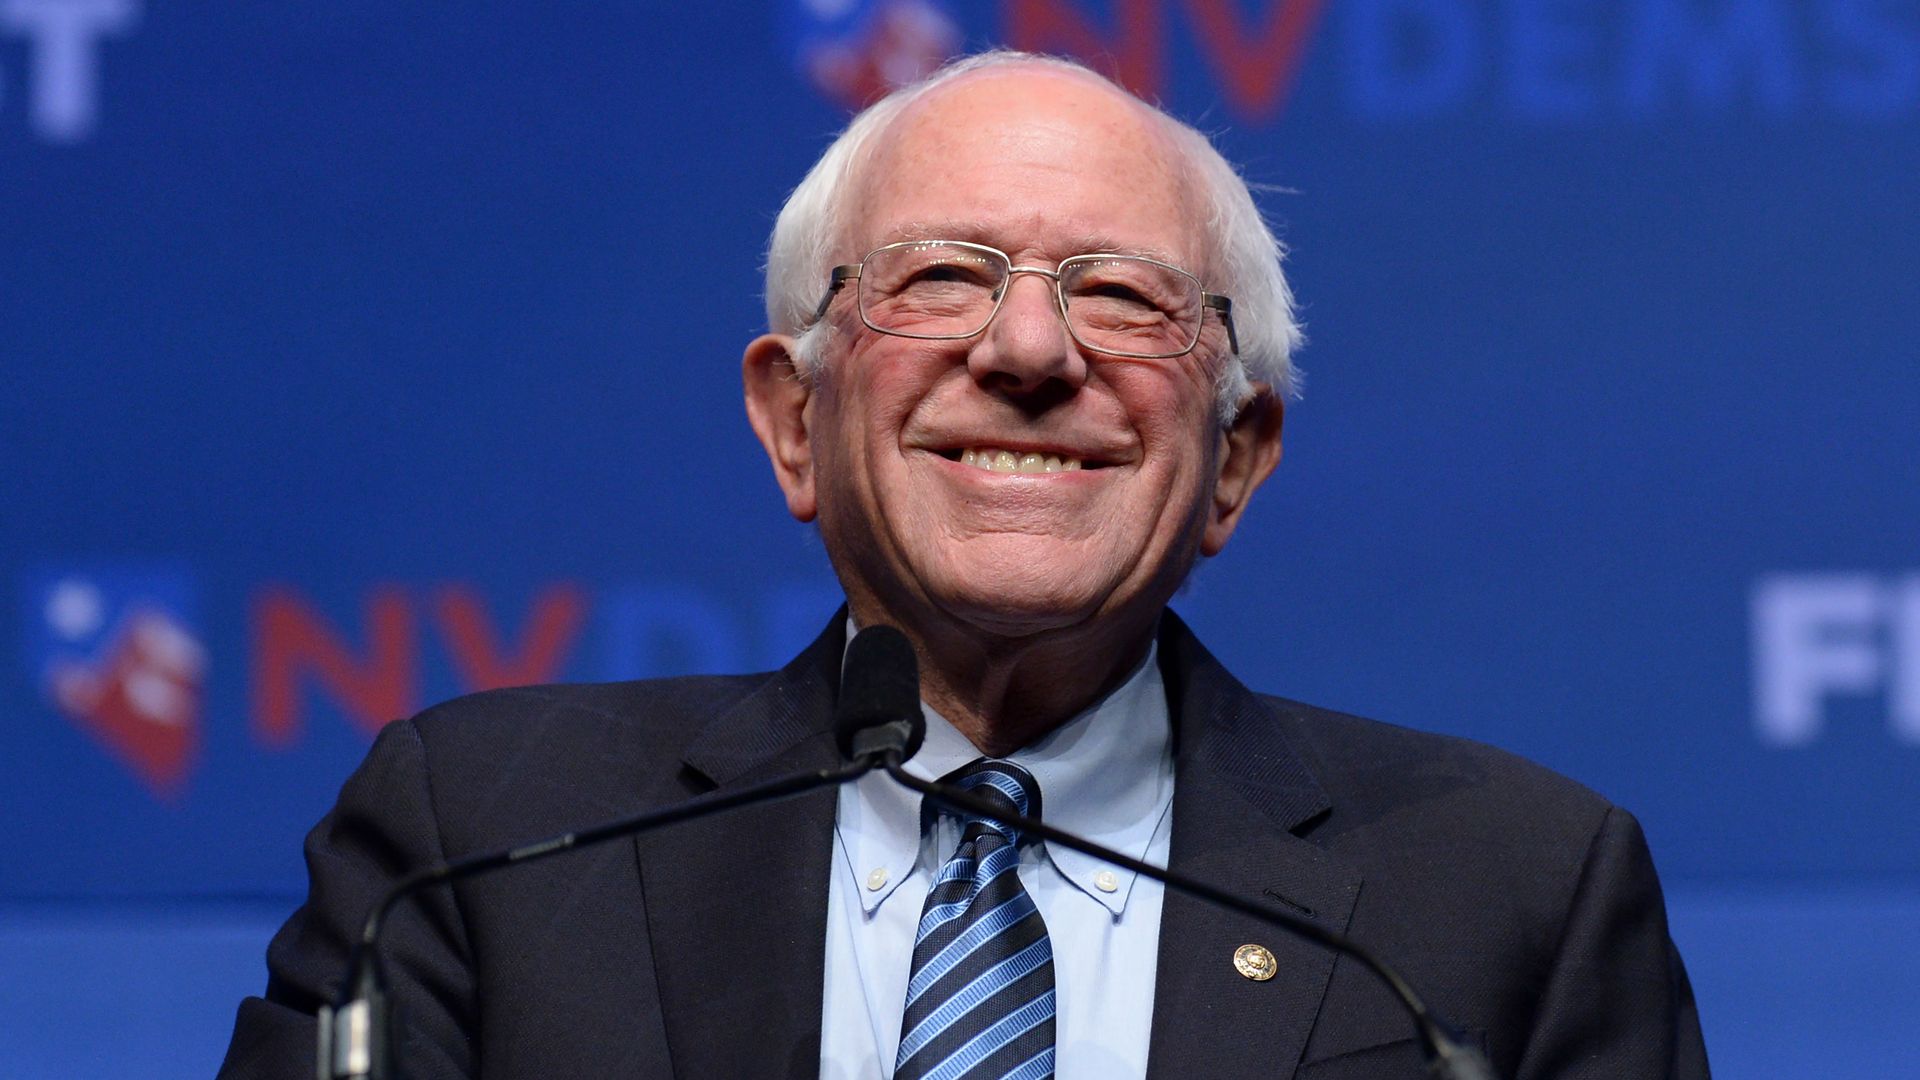 Democratic presidential hopeful Vermont Senator Bernie Sanders speaks on stage at "First in the West" event in Las Vegas, Nevada on November 17